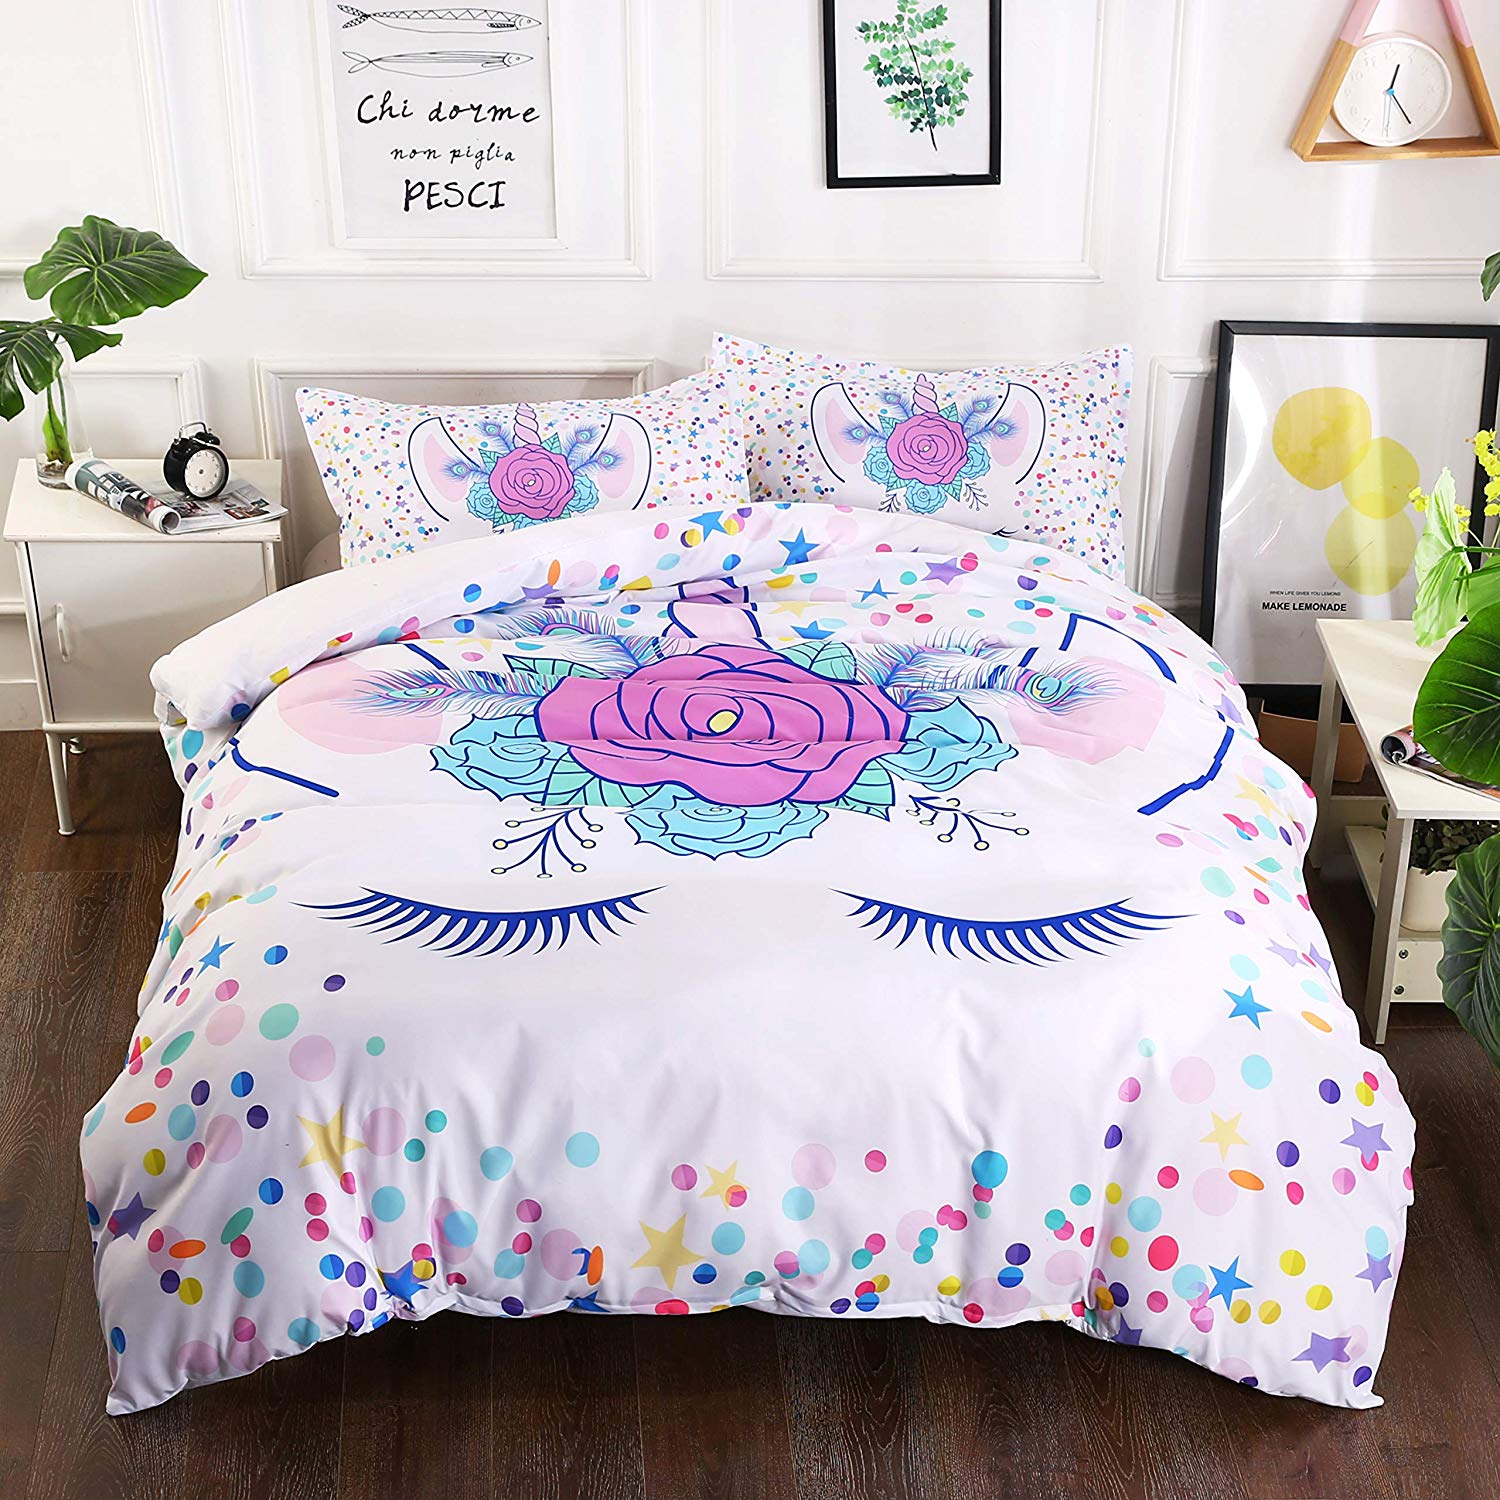 Unicorn Bedding Set Adorable Bed Linen